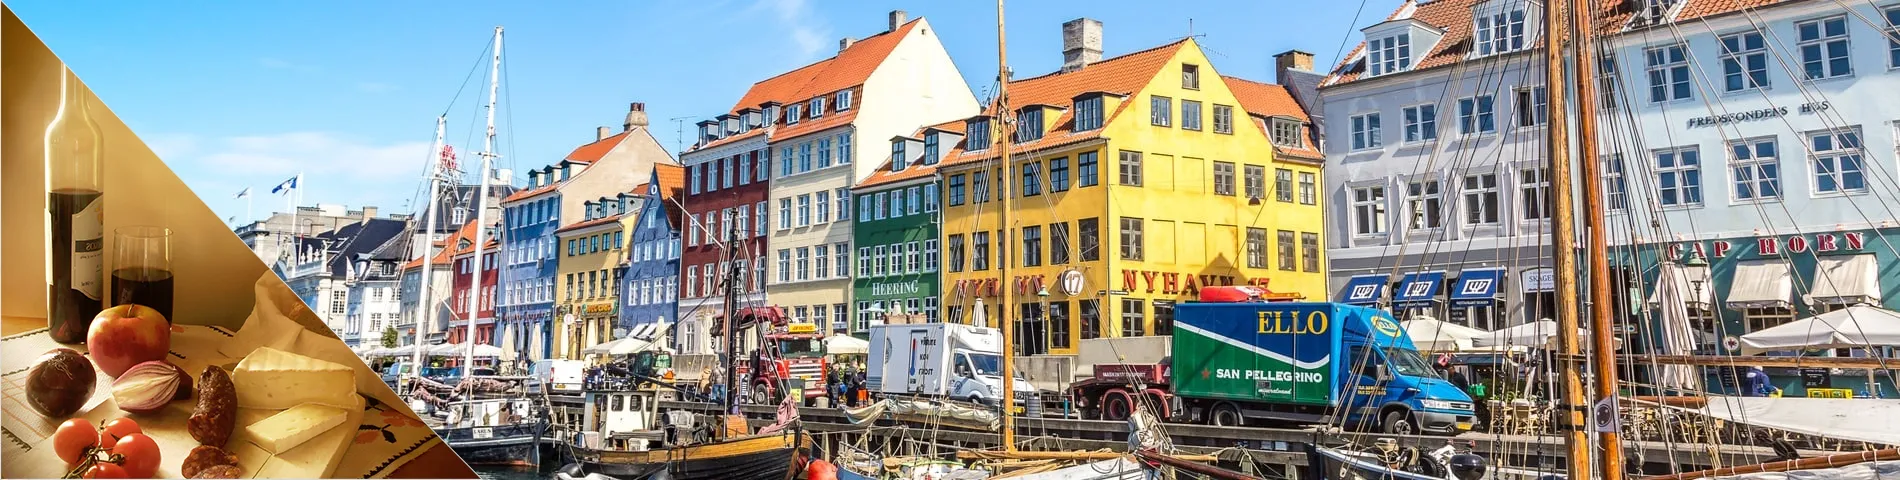 Copenhague - Dinamarquês & Cultura 